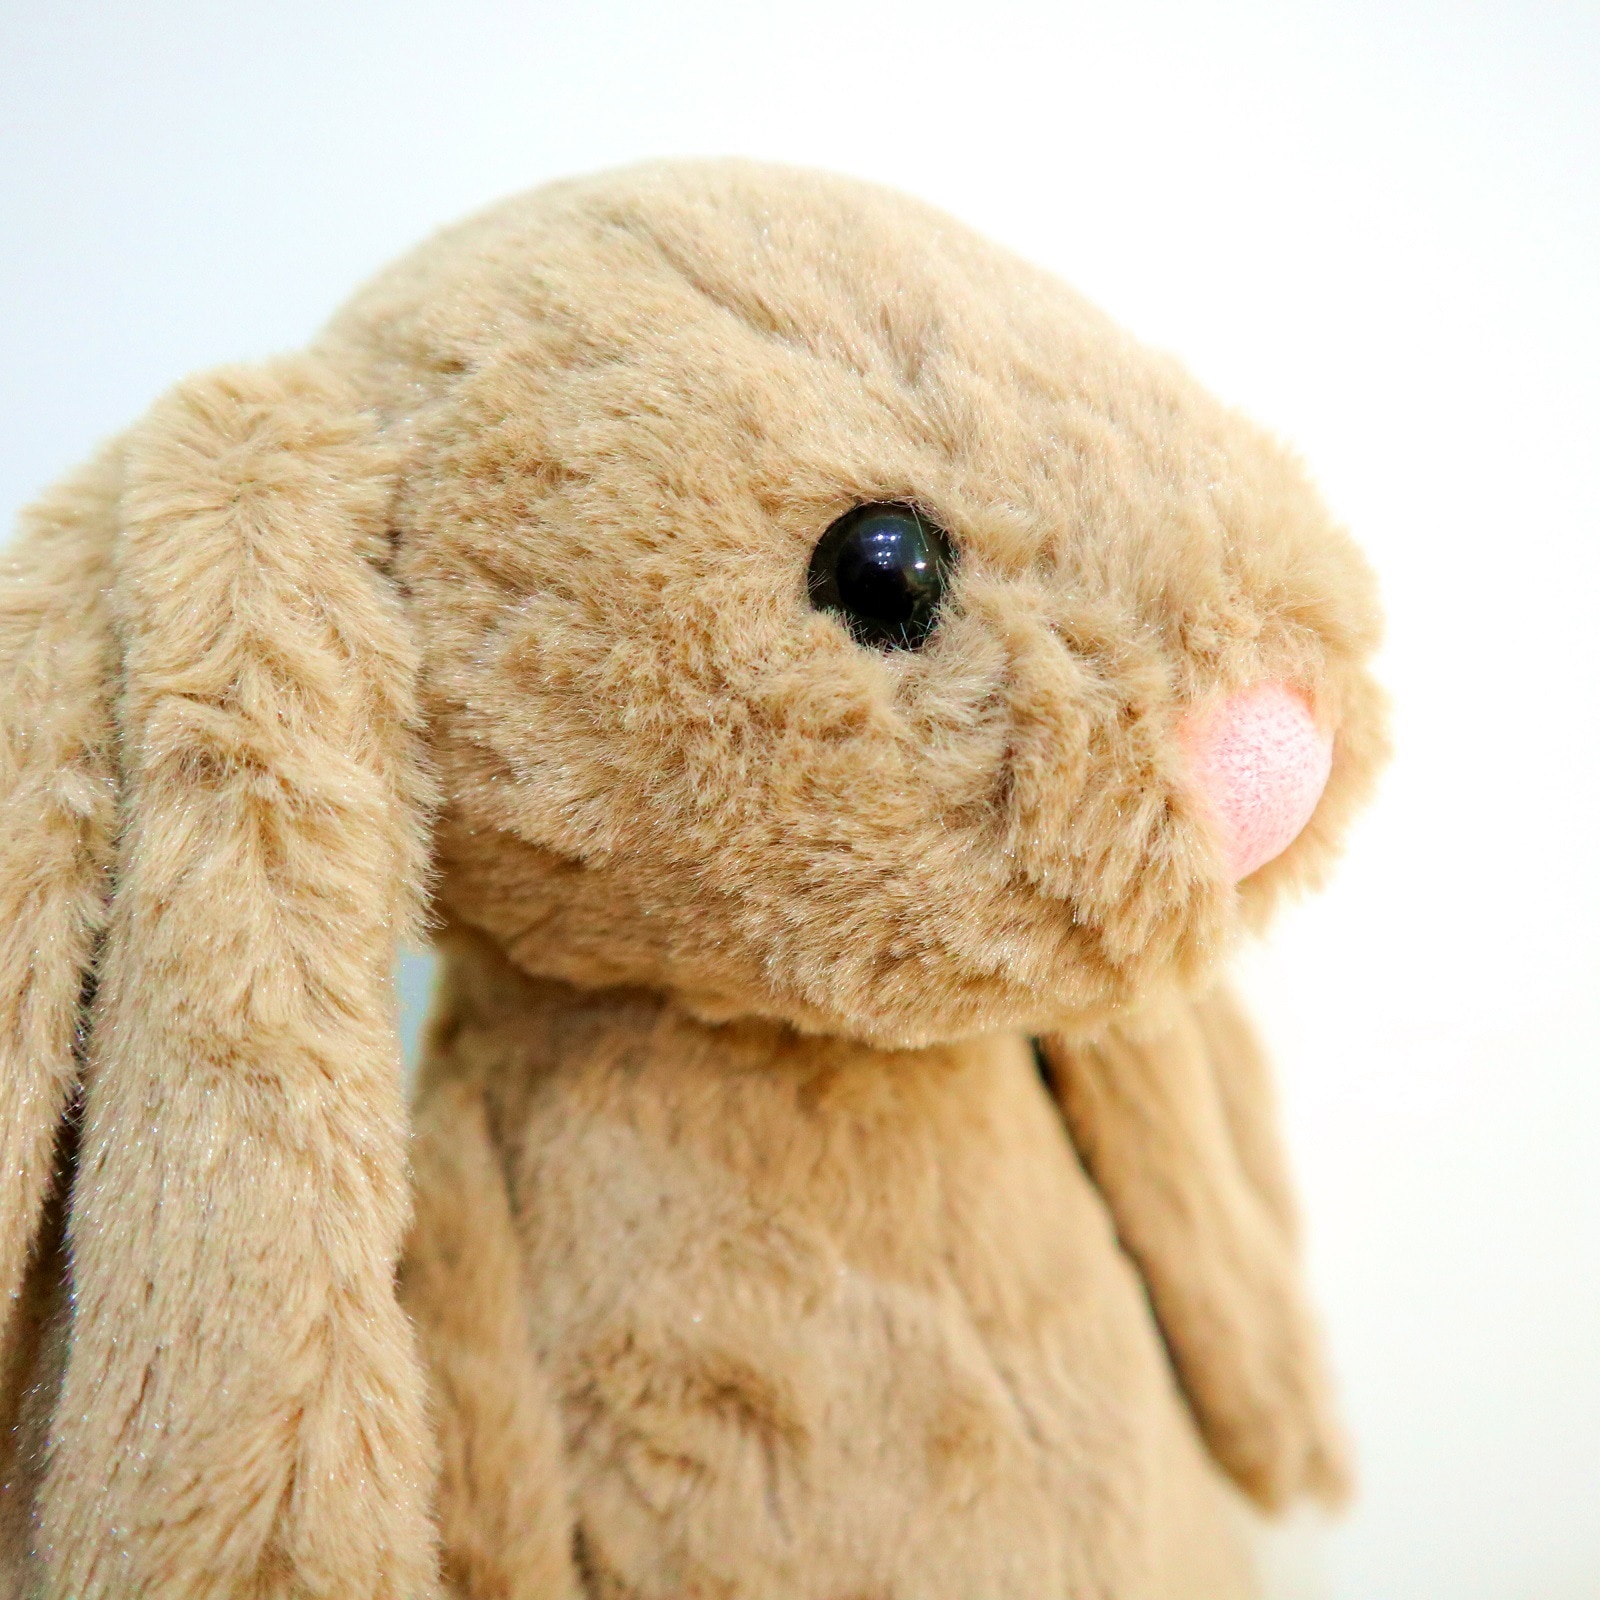 30cm Stuffed Long Ear Rabbit Soft Plush